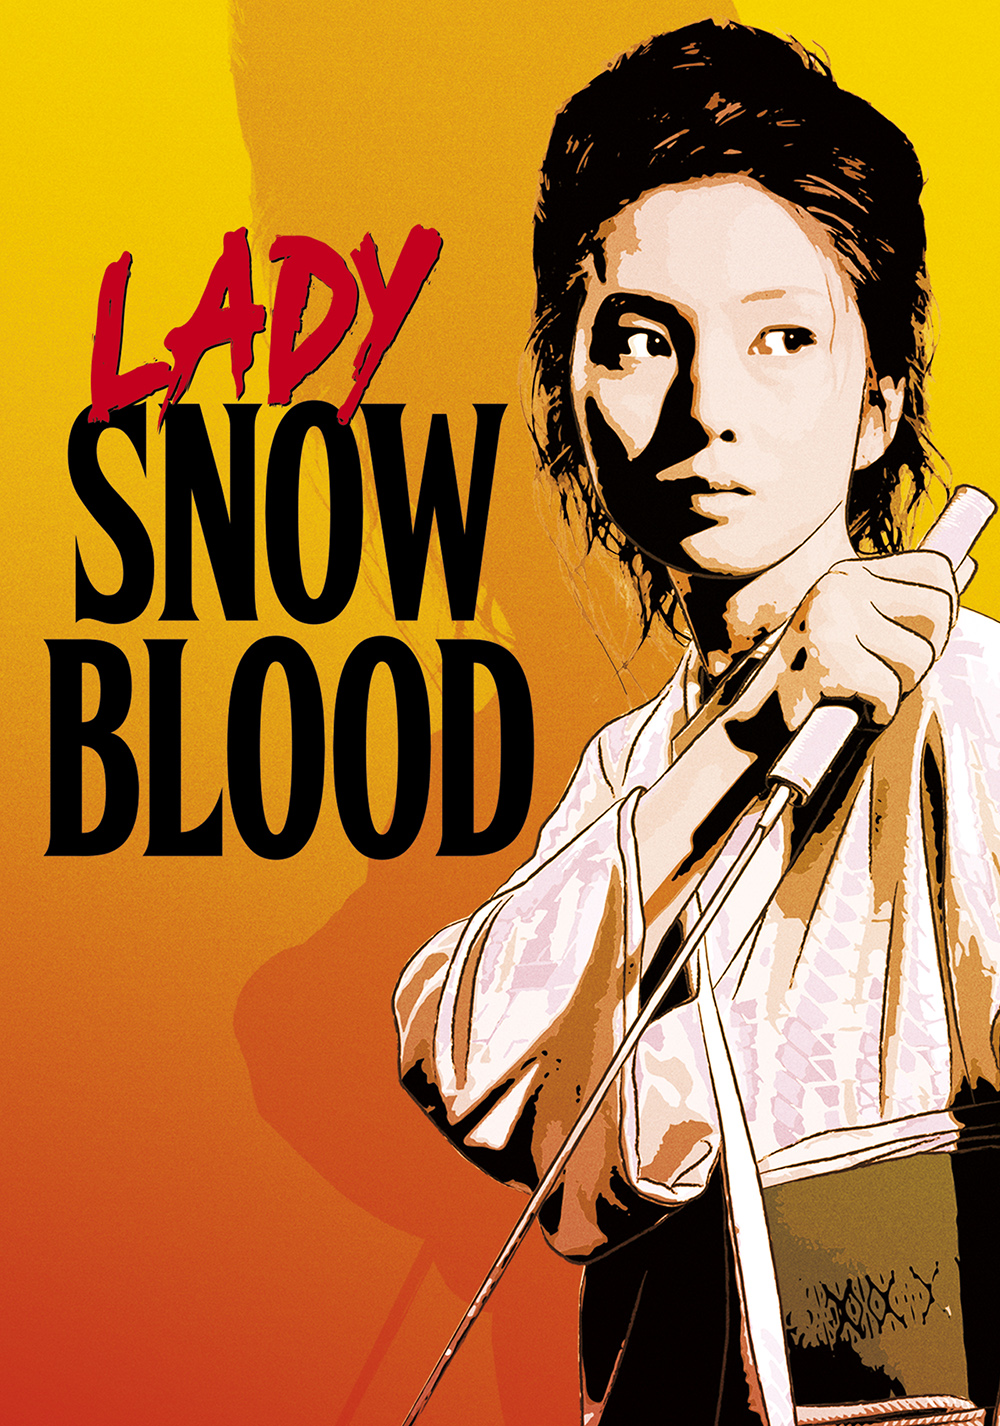 Lady Snowblood